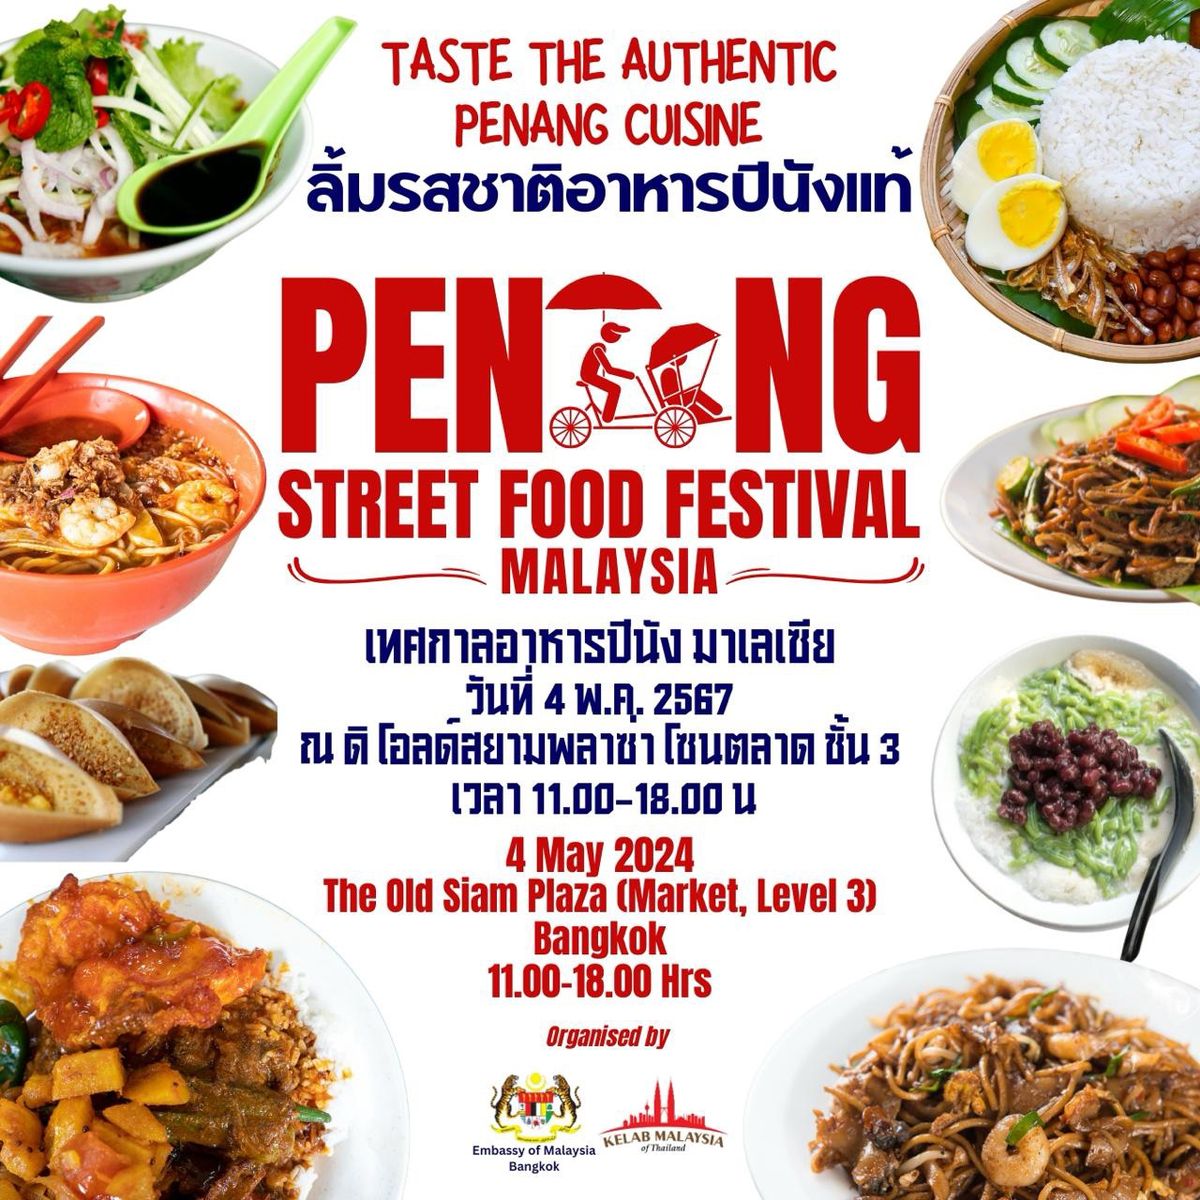 Penang Street Food Festival 2.0